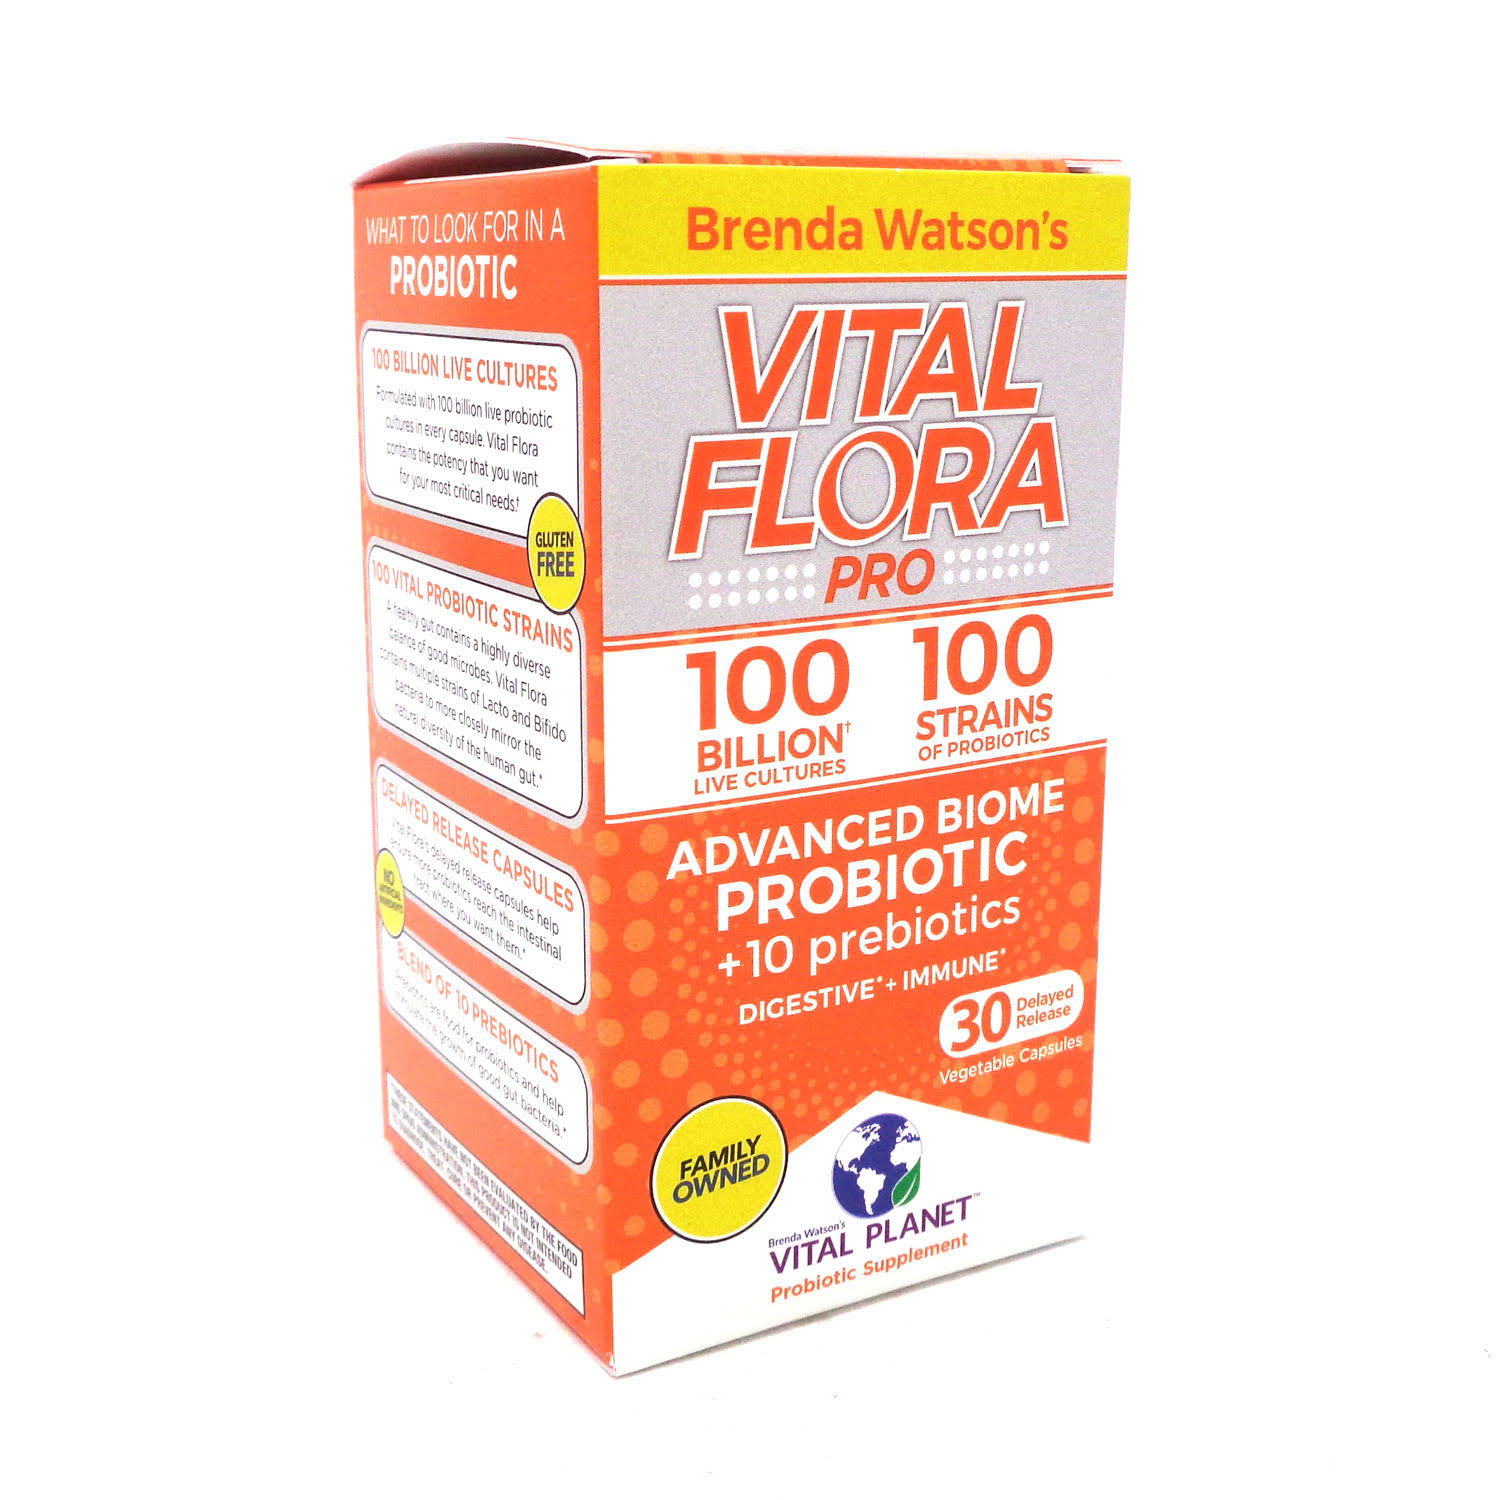 Vital Flora Pro Advanced Biome Probiotic Vital Flora 30 Vcaps